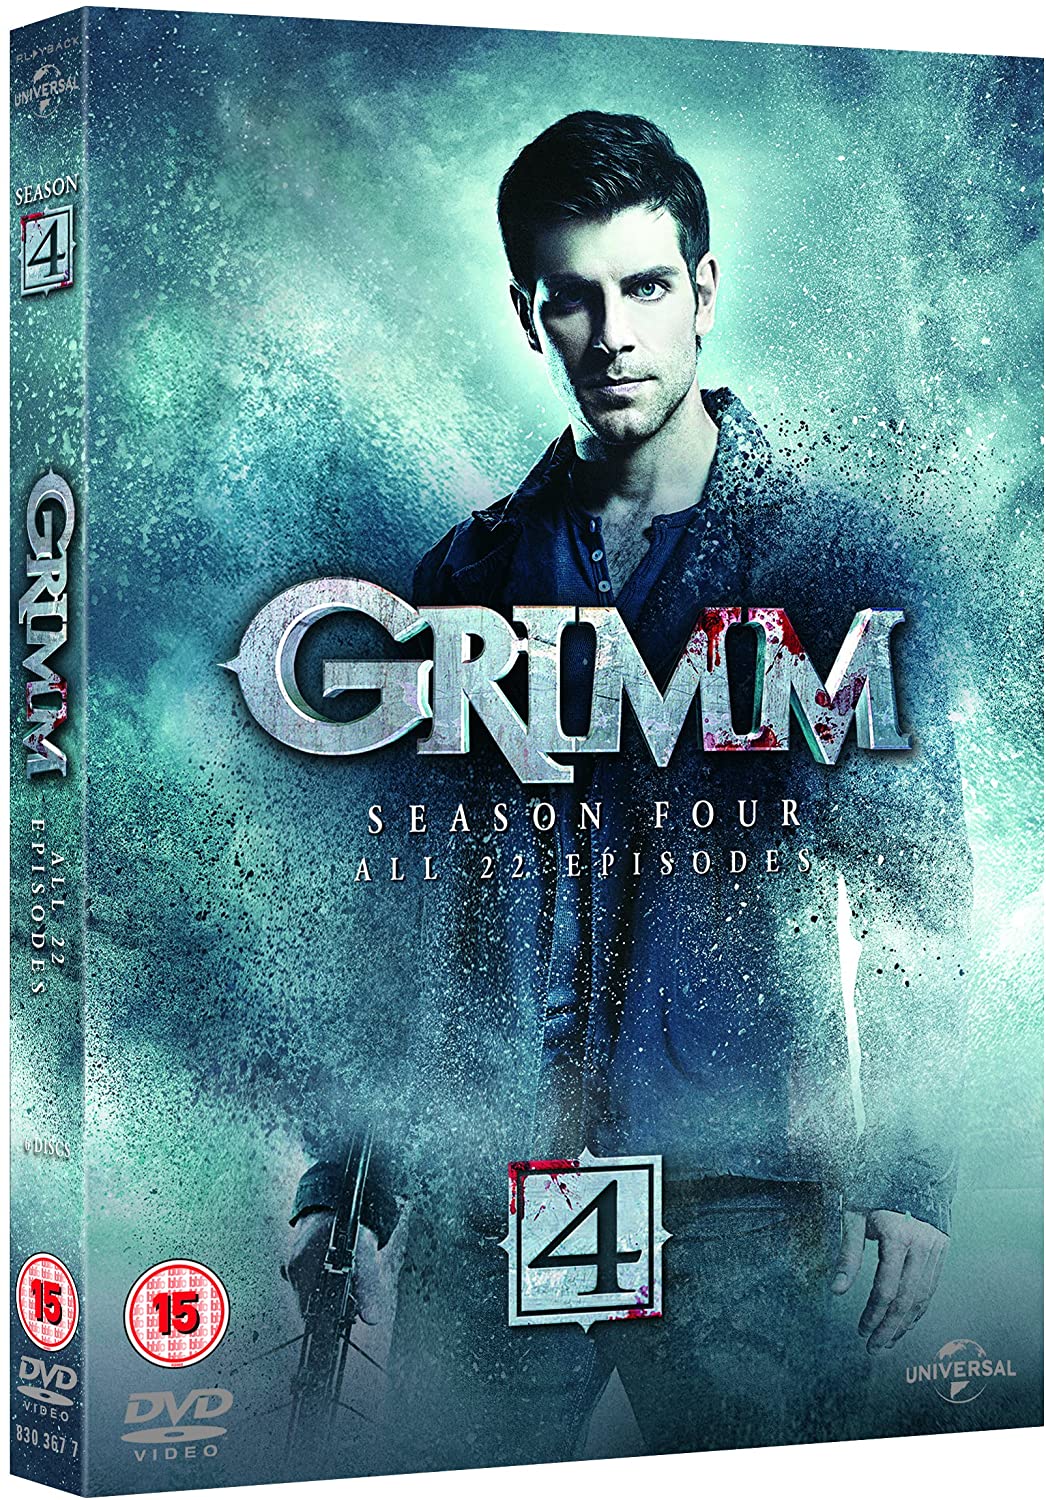 Grimm - Season 4 [DVD] [2014]